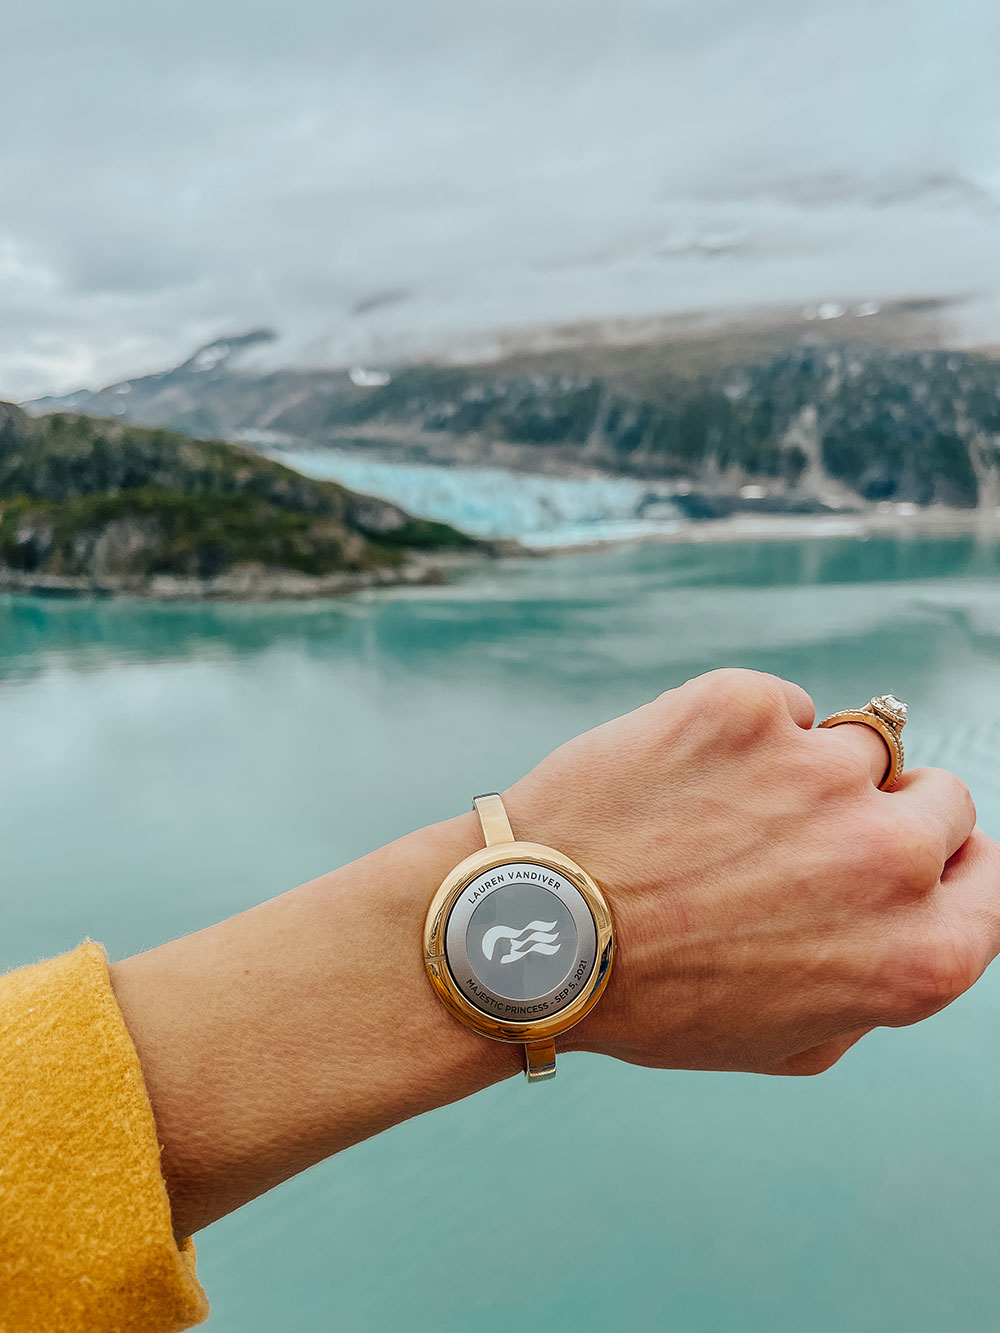 princess medallion wearable technology gold watch accessory - alaskan scenic cruising glacier bay national park